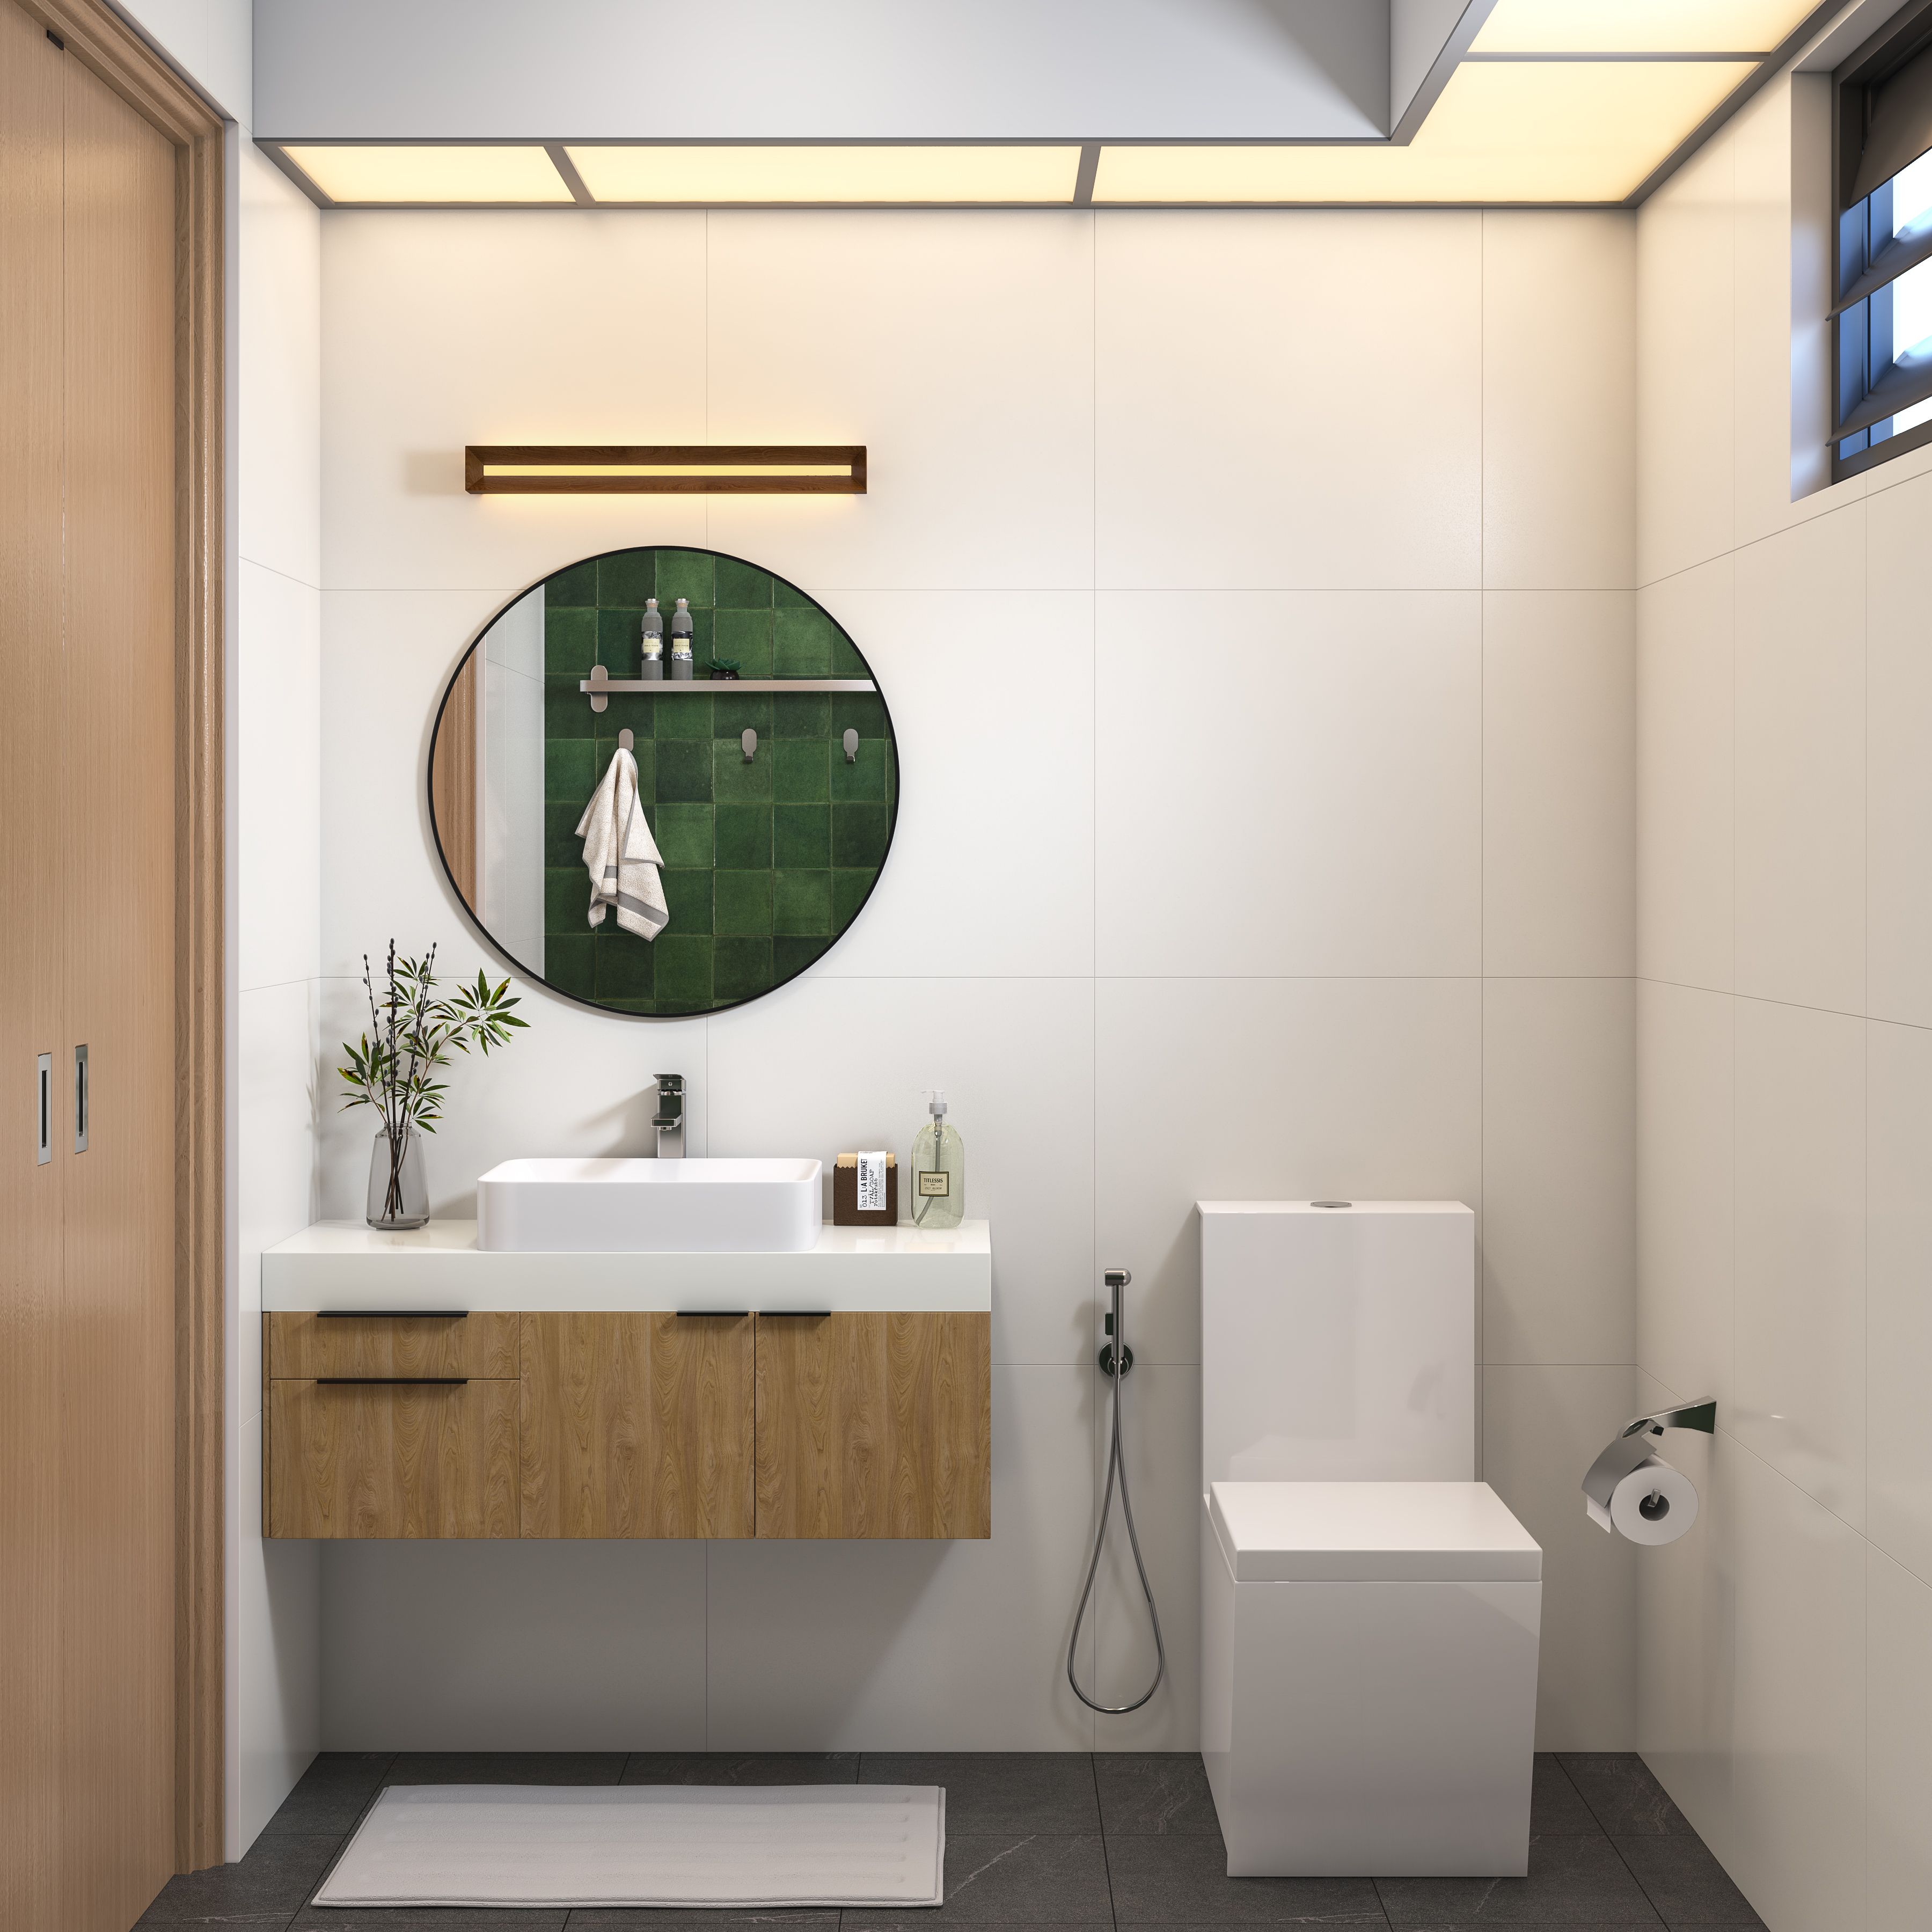 Contemporary Toilet Design With Round Vanity Mirror